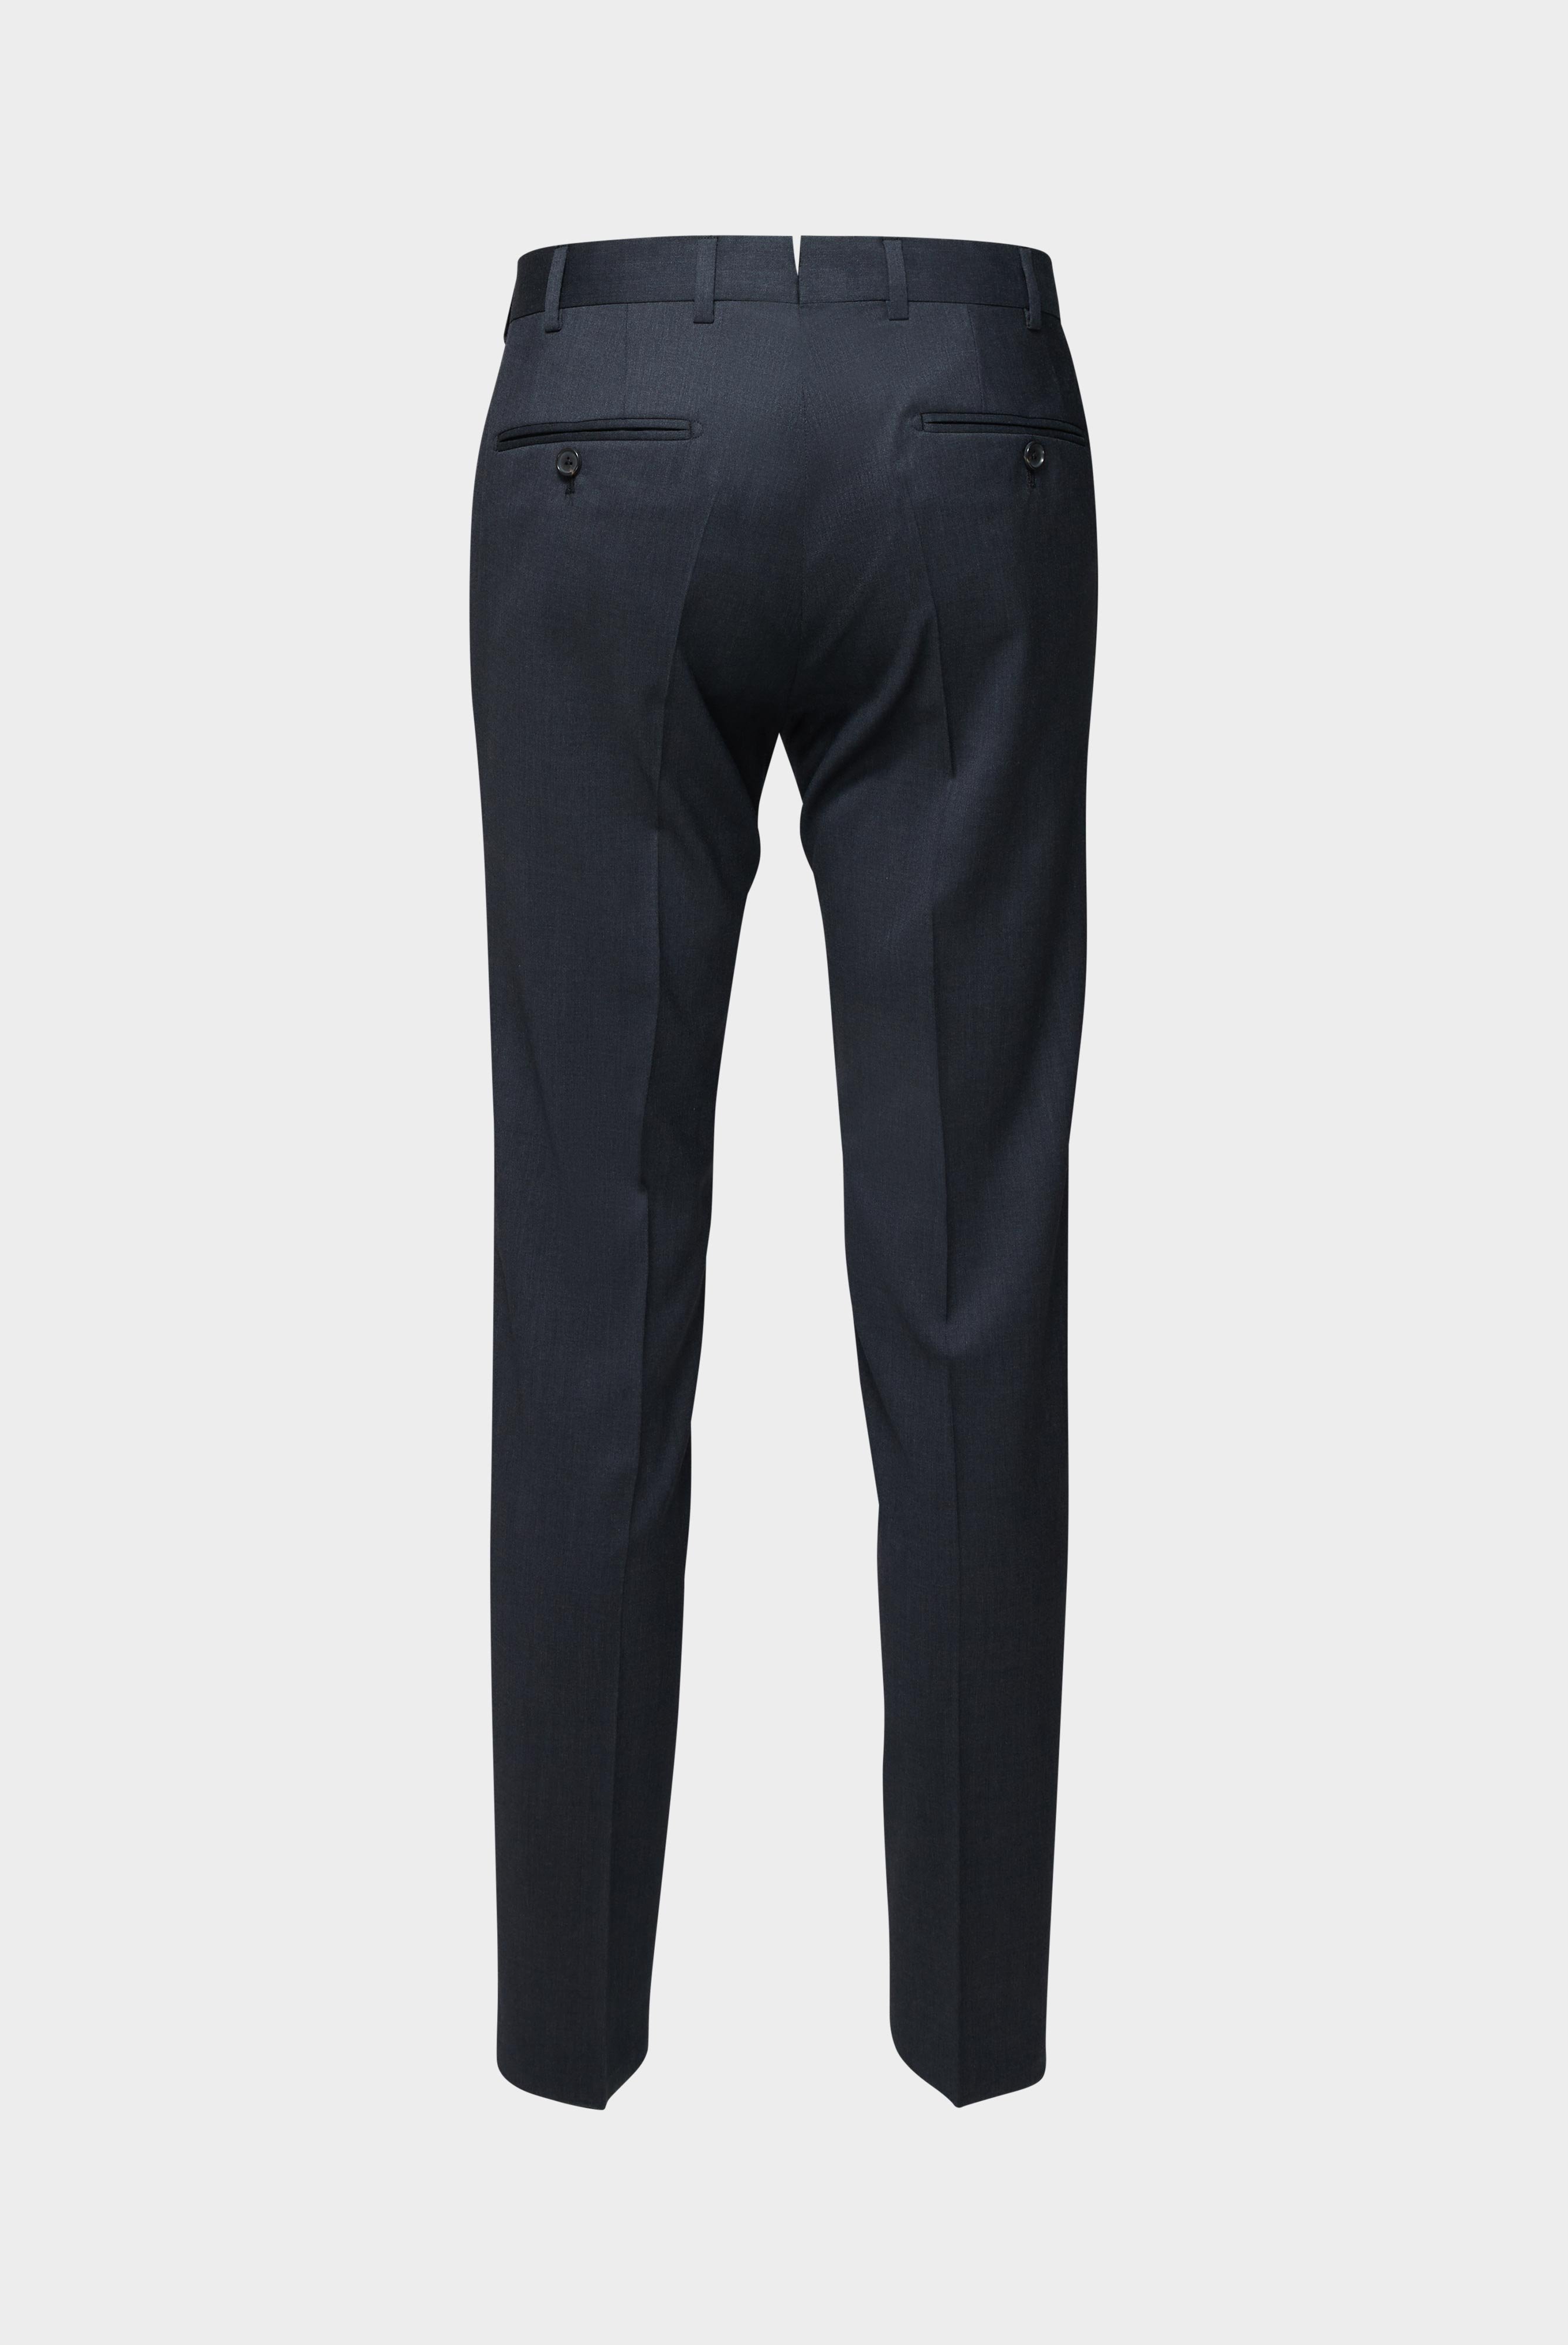 Jeans & Hosen+Hose aus Wolle Slim Fit+20.7880.16.H01010.090.31